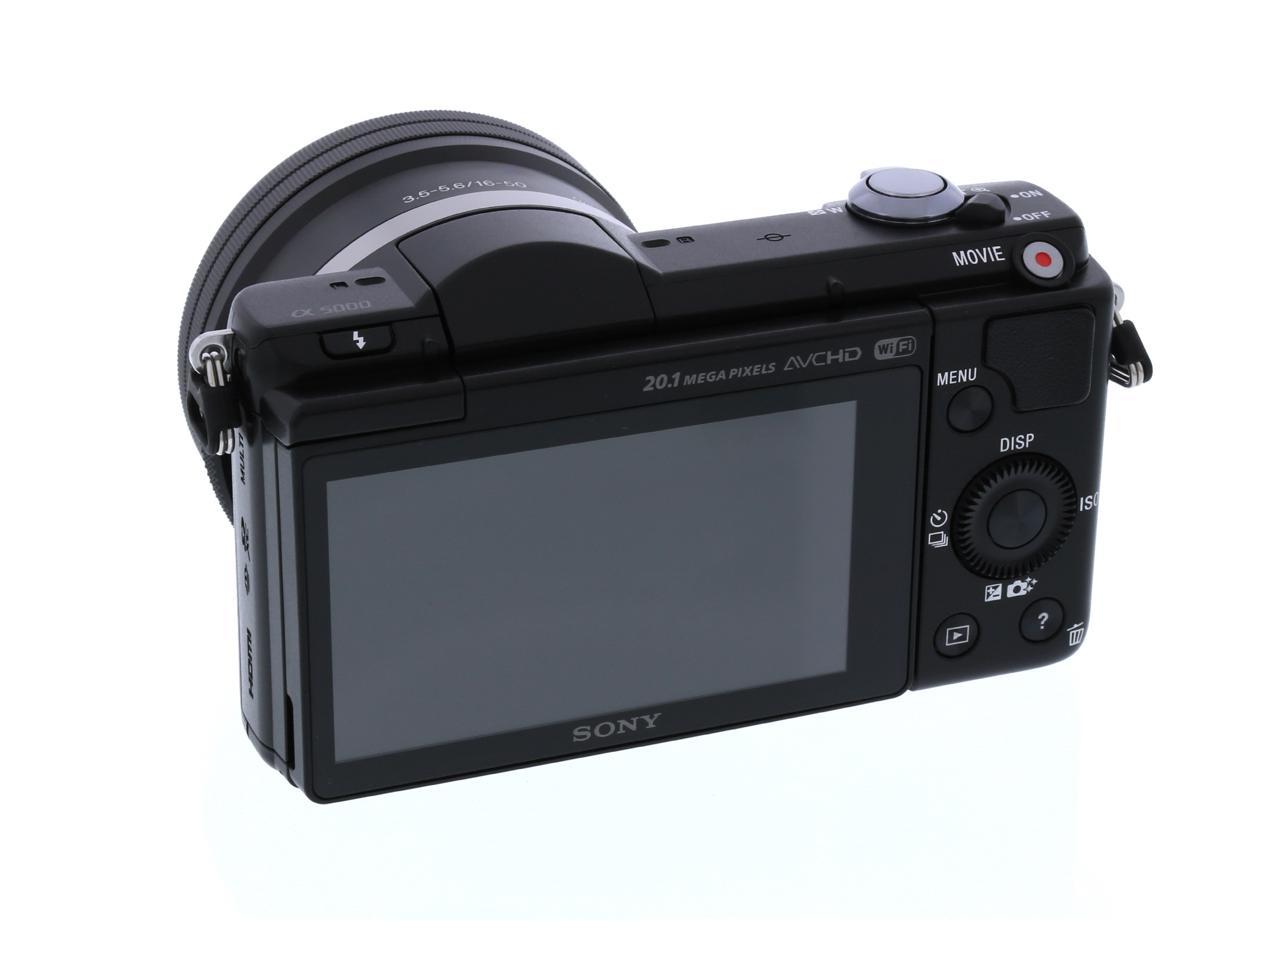 SONY Alpha a5000 ILCE-5000L/B Black Compact Interchangeable Lens 